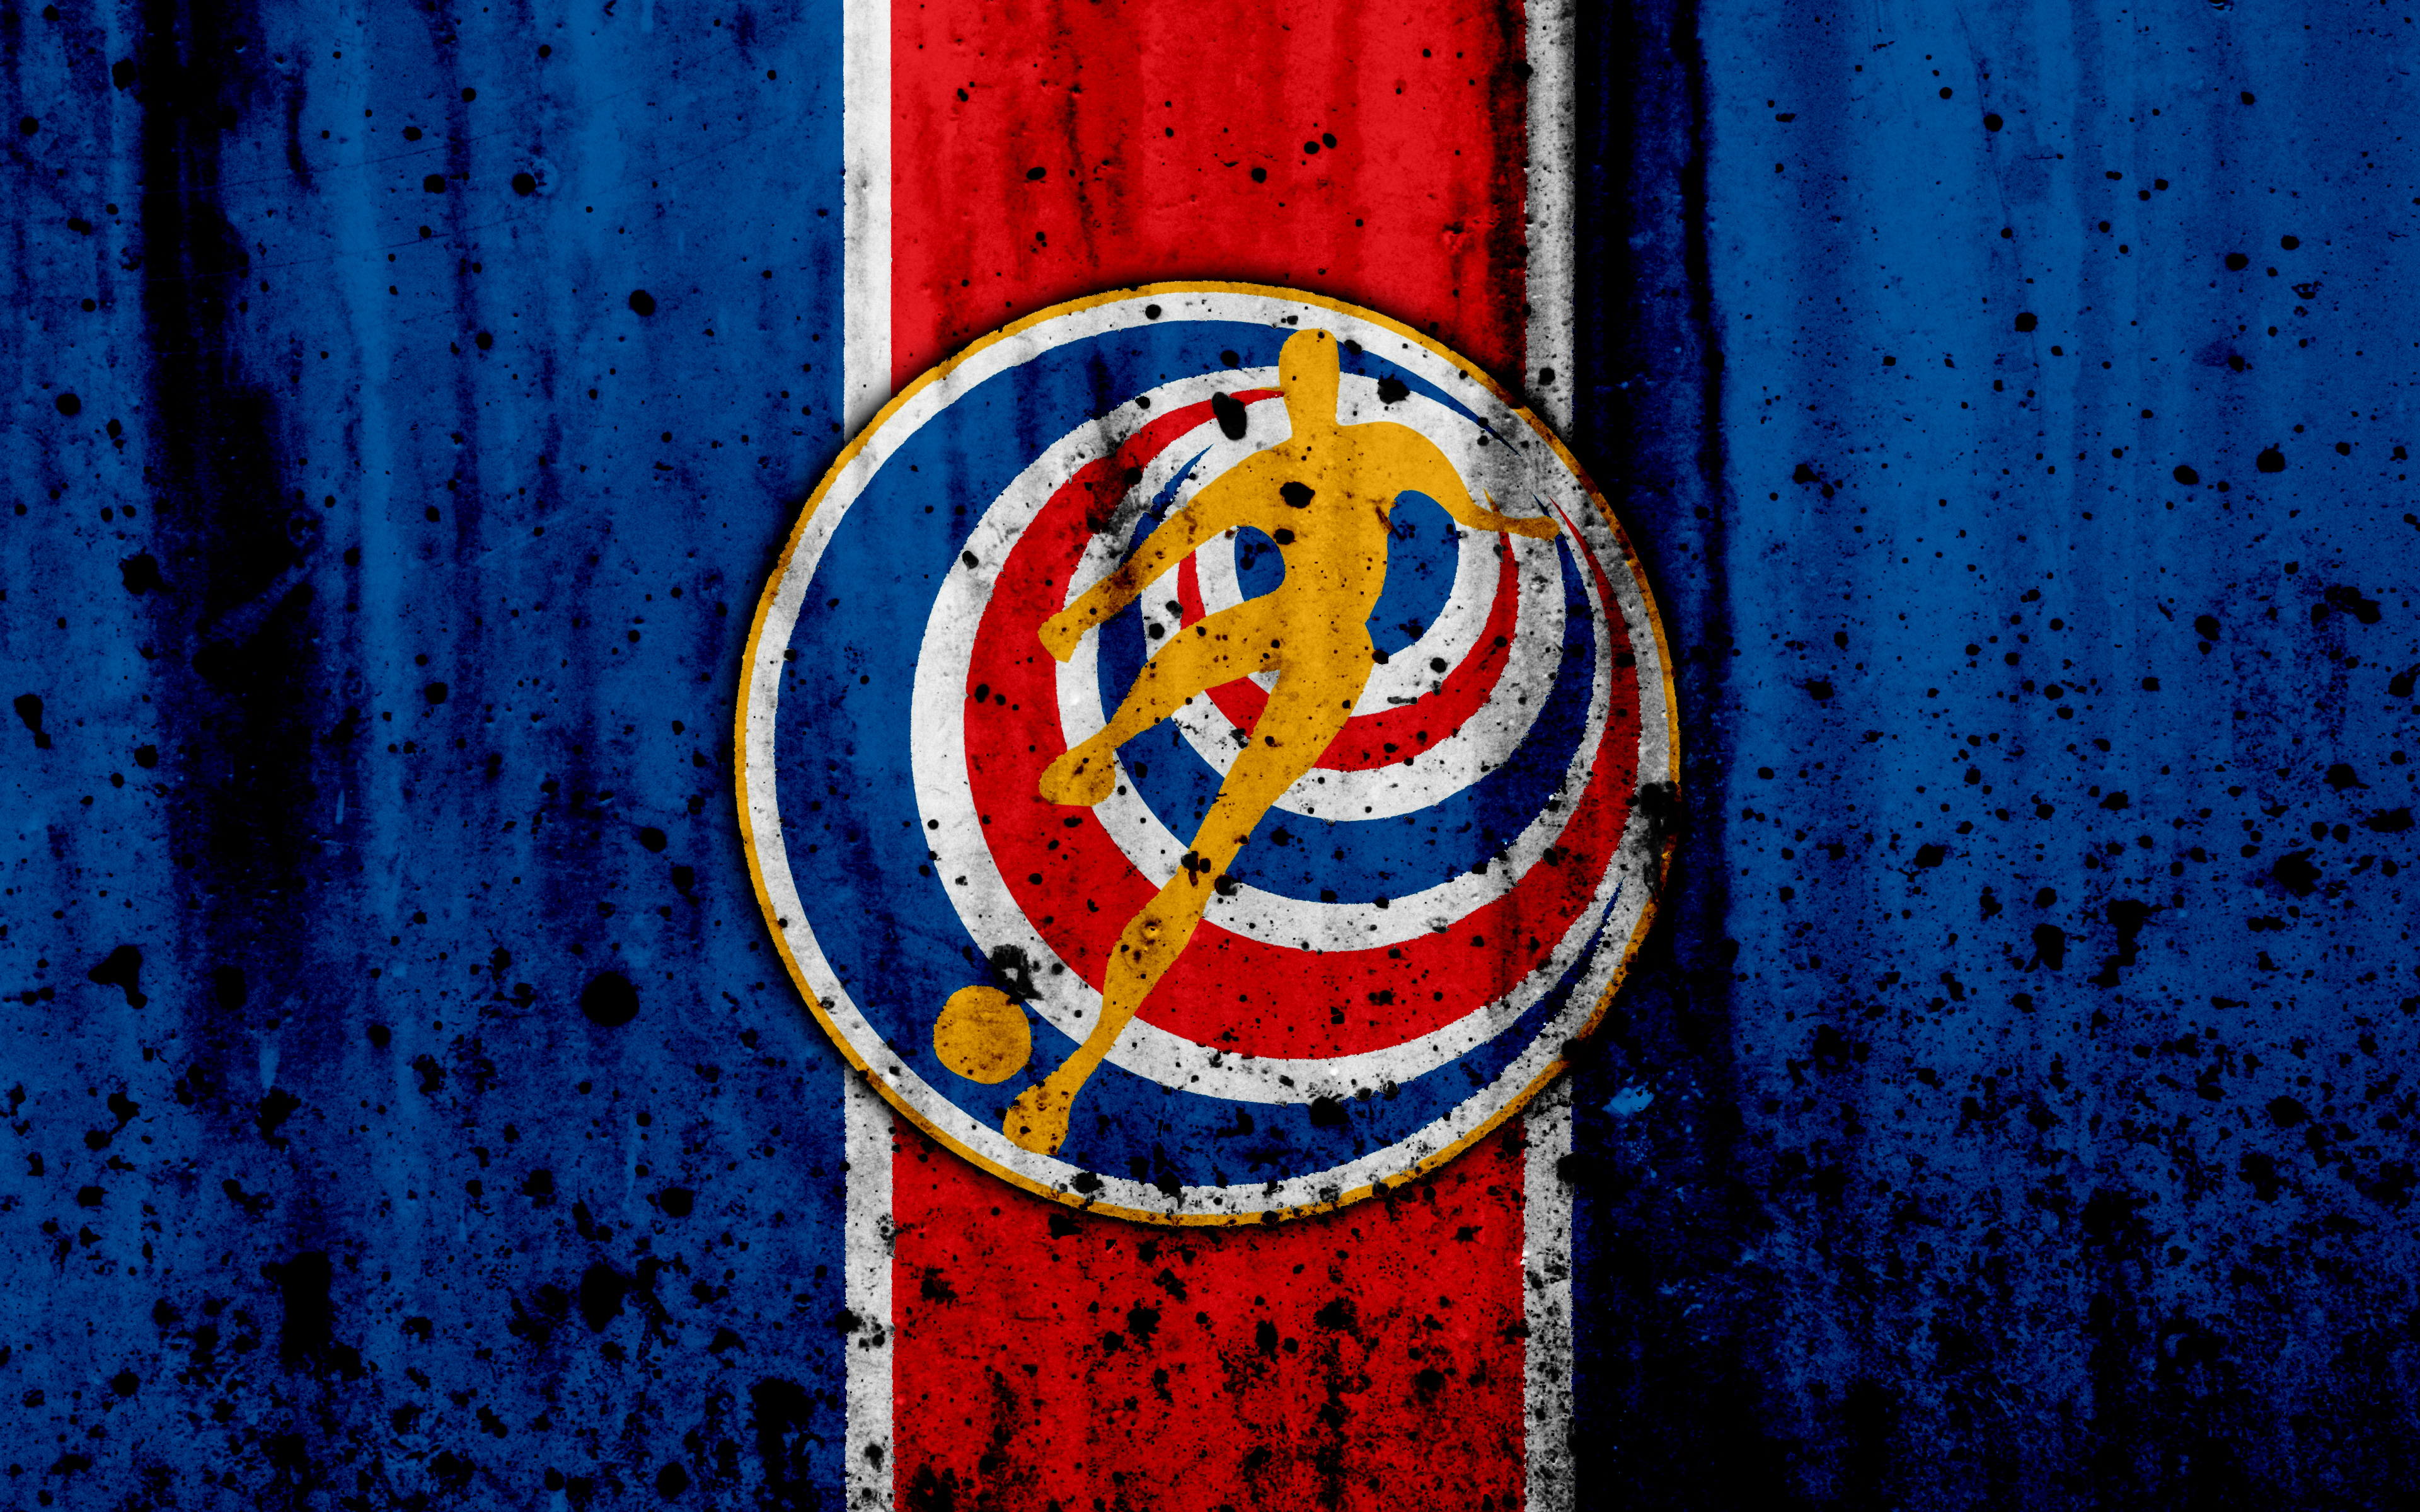 Costa Rica Emblem Logo Soccer 3840x2400